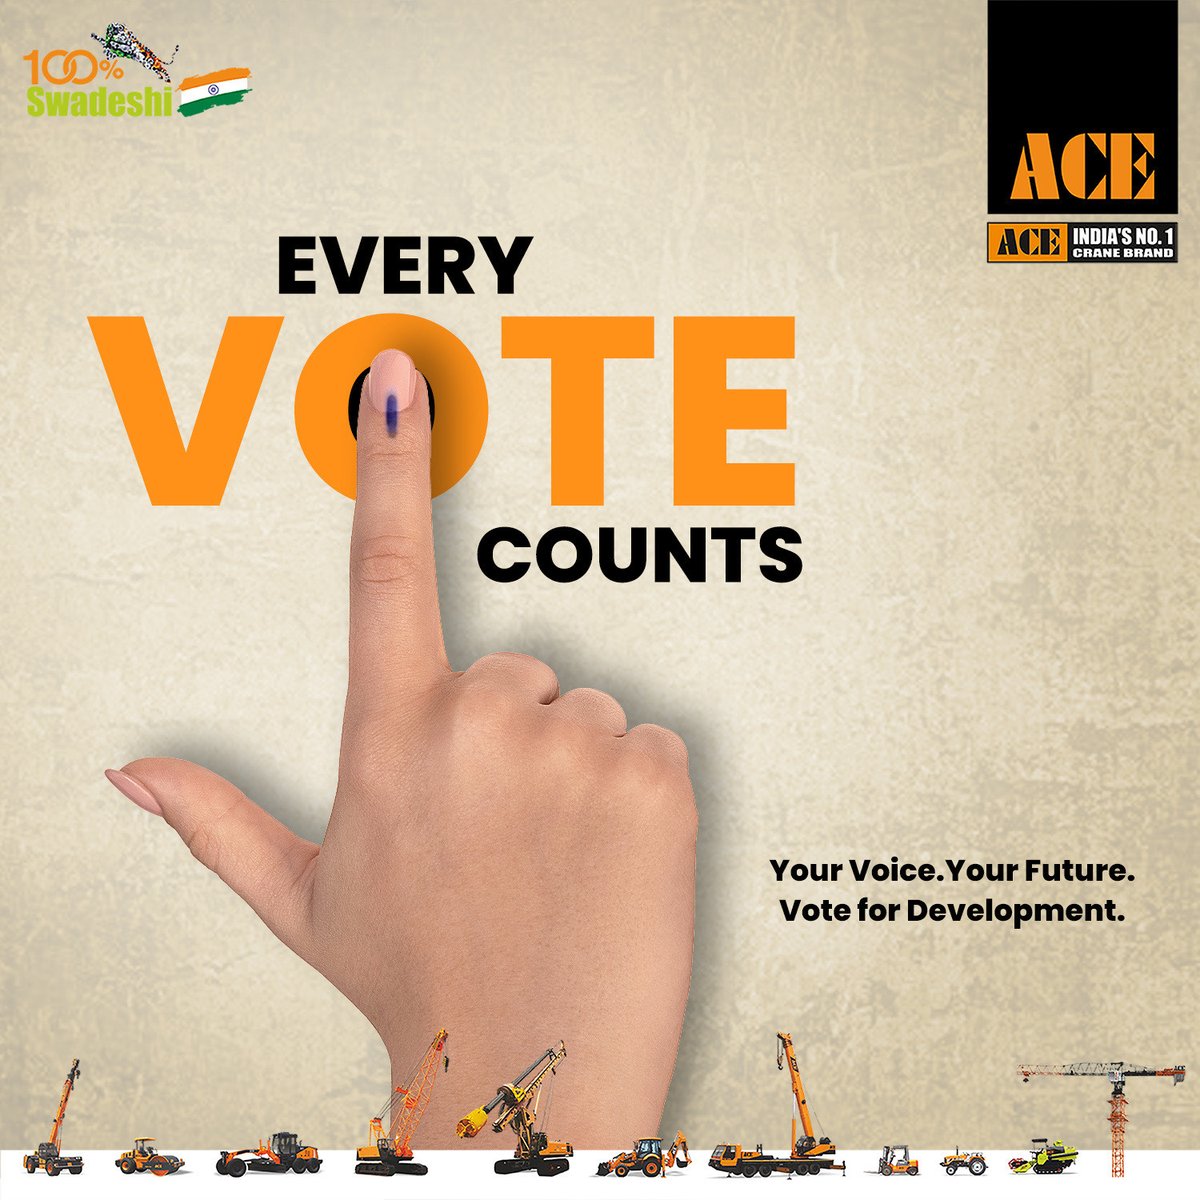 Every Vote Counts. 
Your Voice. Your Future.
Vote for Development.
#ACE #AceCranesIndia #AceCranes #ConstructionEquipment #MobileCrane #TowerCranes #LokSabhaElections2024 #ECI #ChunavKaParv #DeshKaGarv #Elections2024  #Faridabad #Haryana #IVoteForSure  #SVEEP_Faridabad